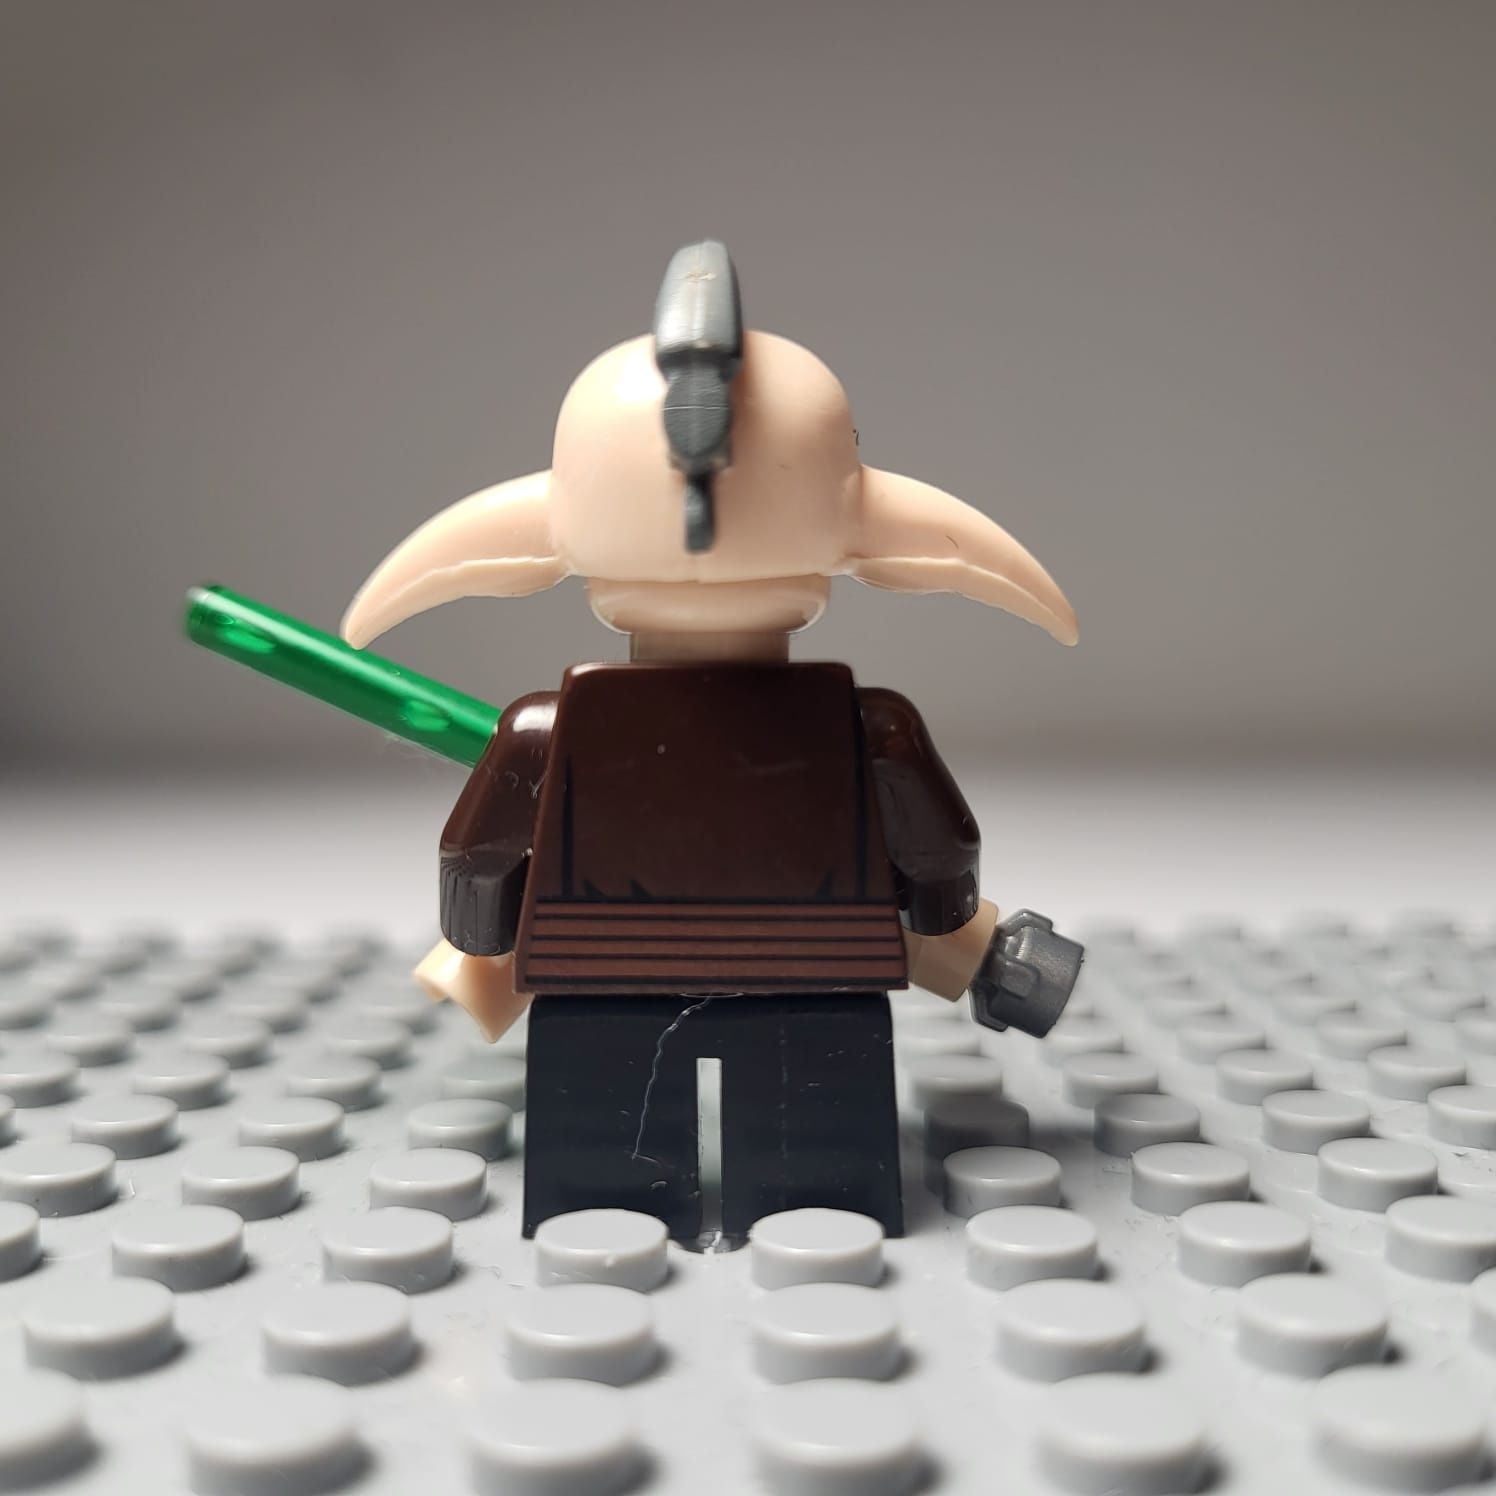 Even Piell | Star Wars | Gratis Naklejka Lego